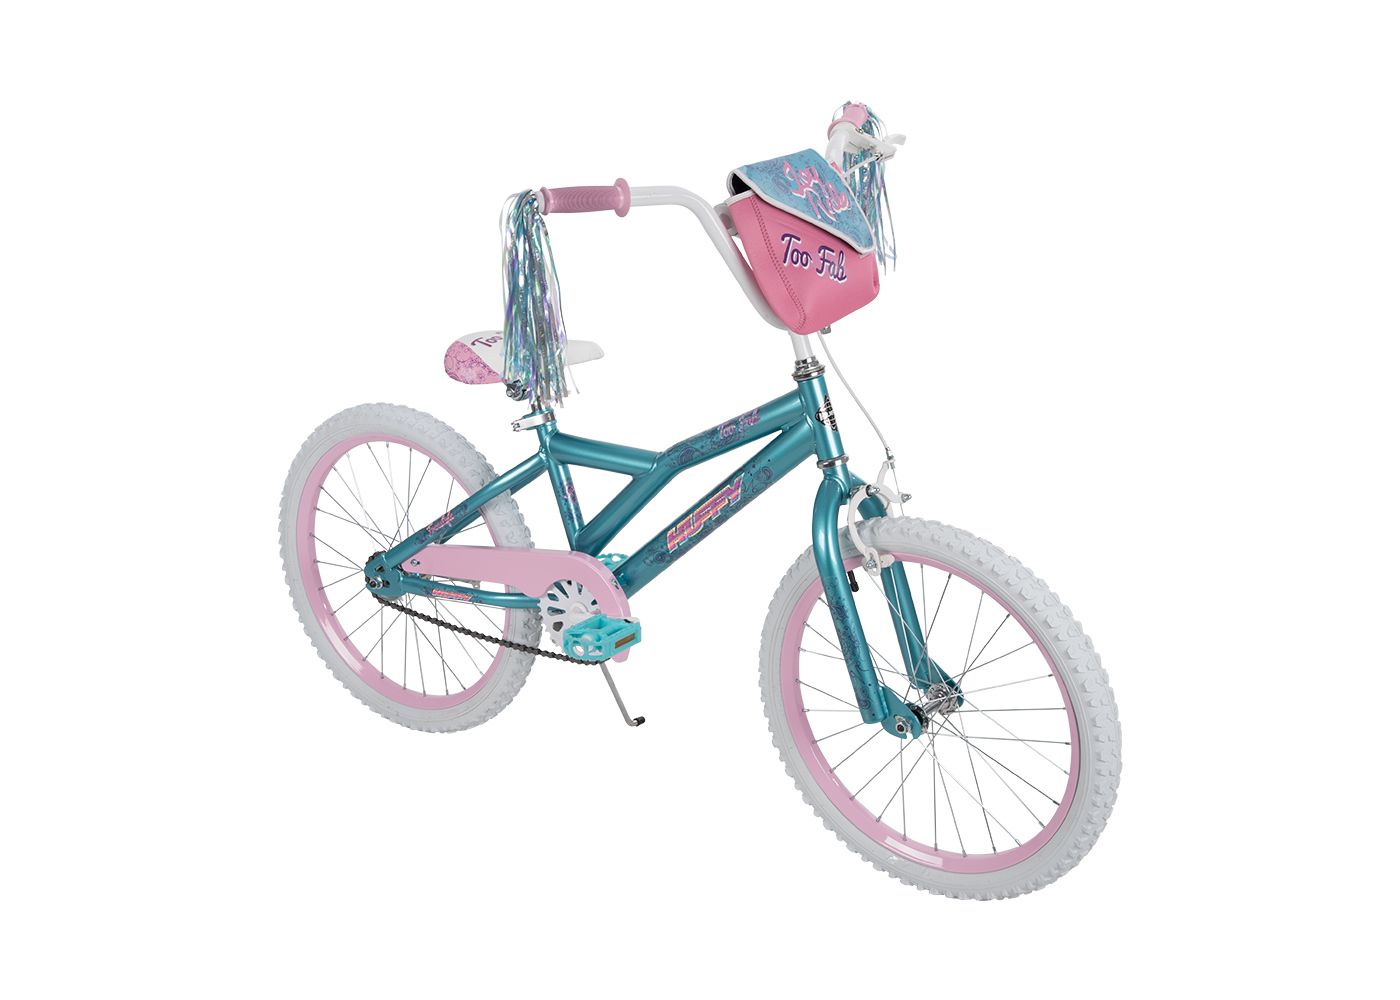 Huffy Too Fab 20" Kids' Bike - Metallic Blue/Pink - image 3 of 6